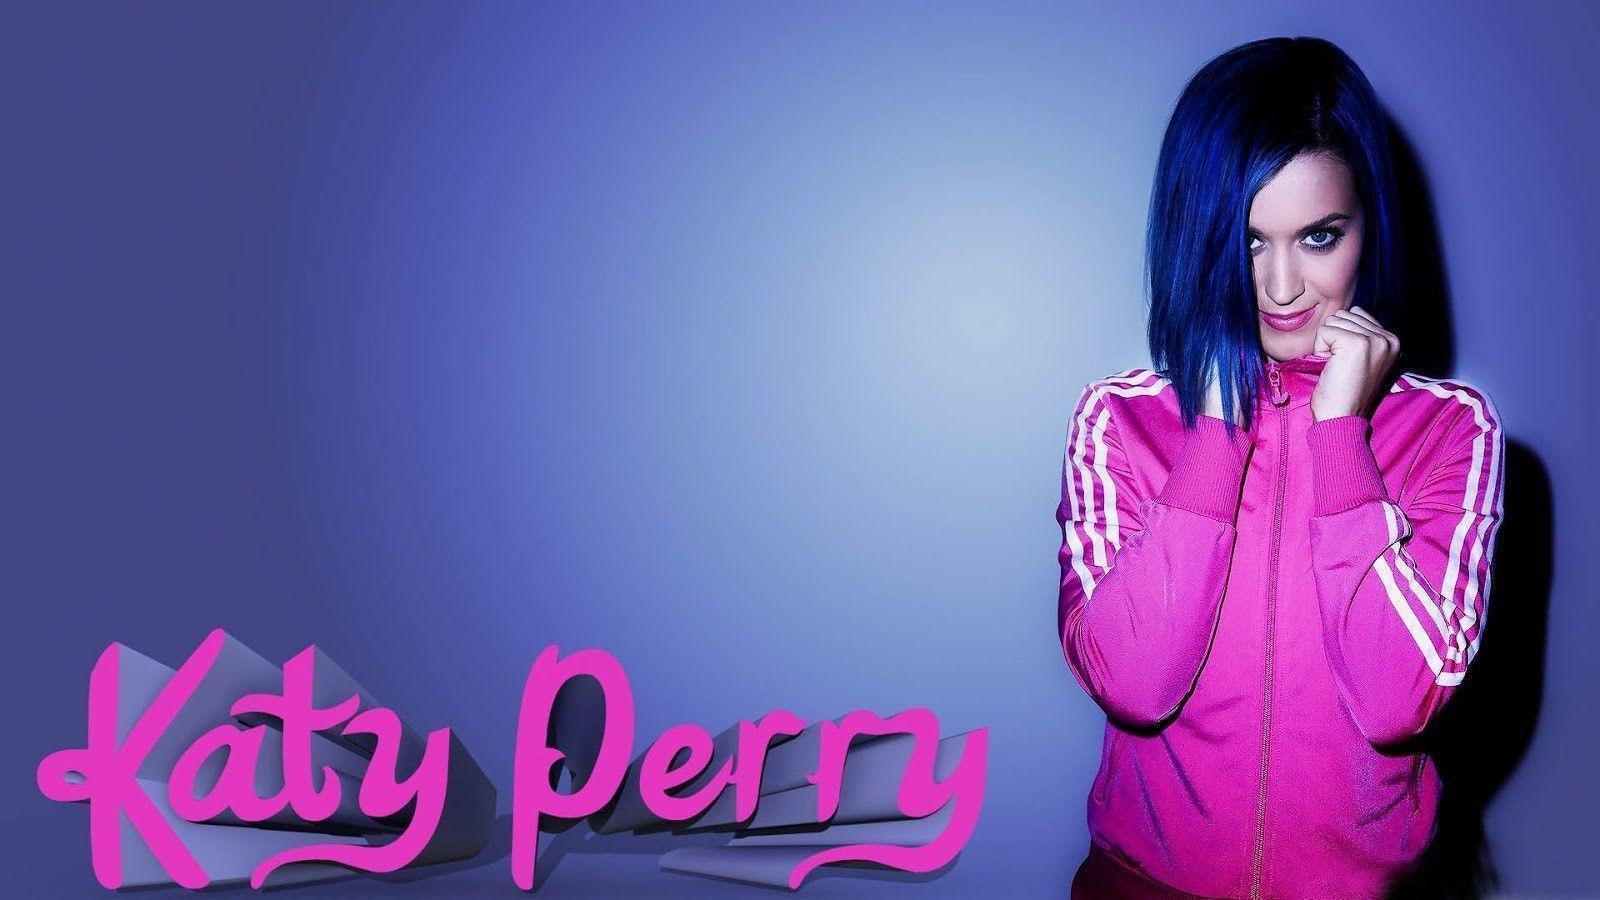 Katy Perry Full HD Wallpaper 1080p